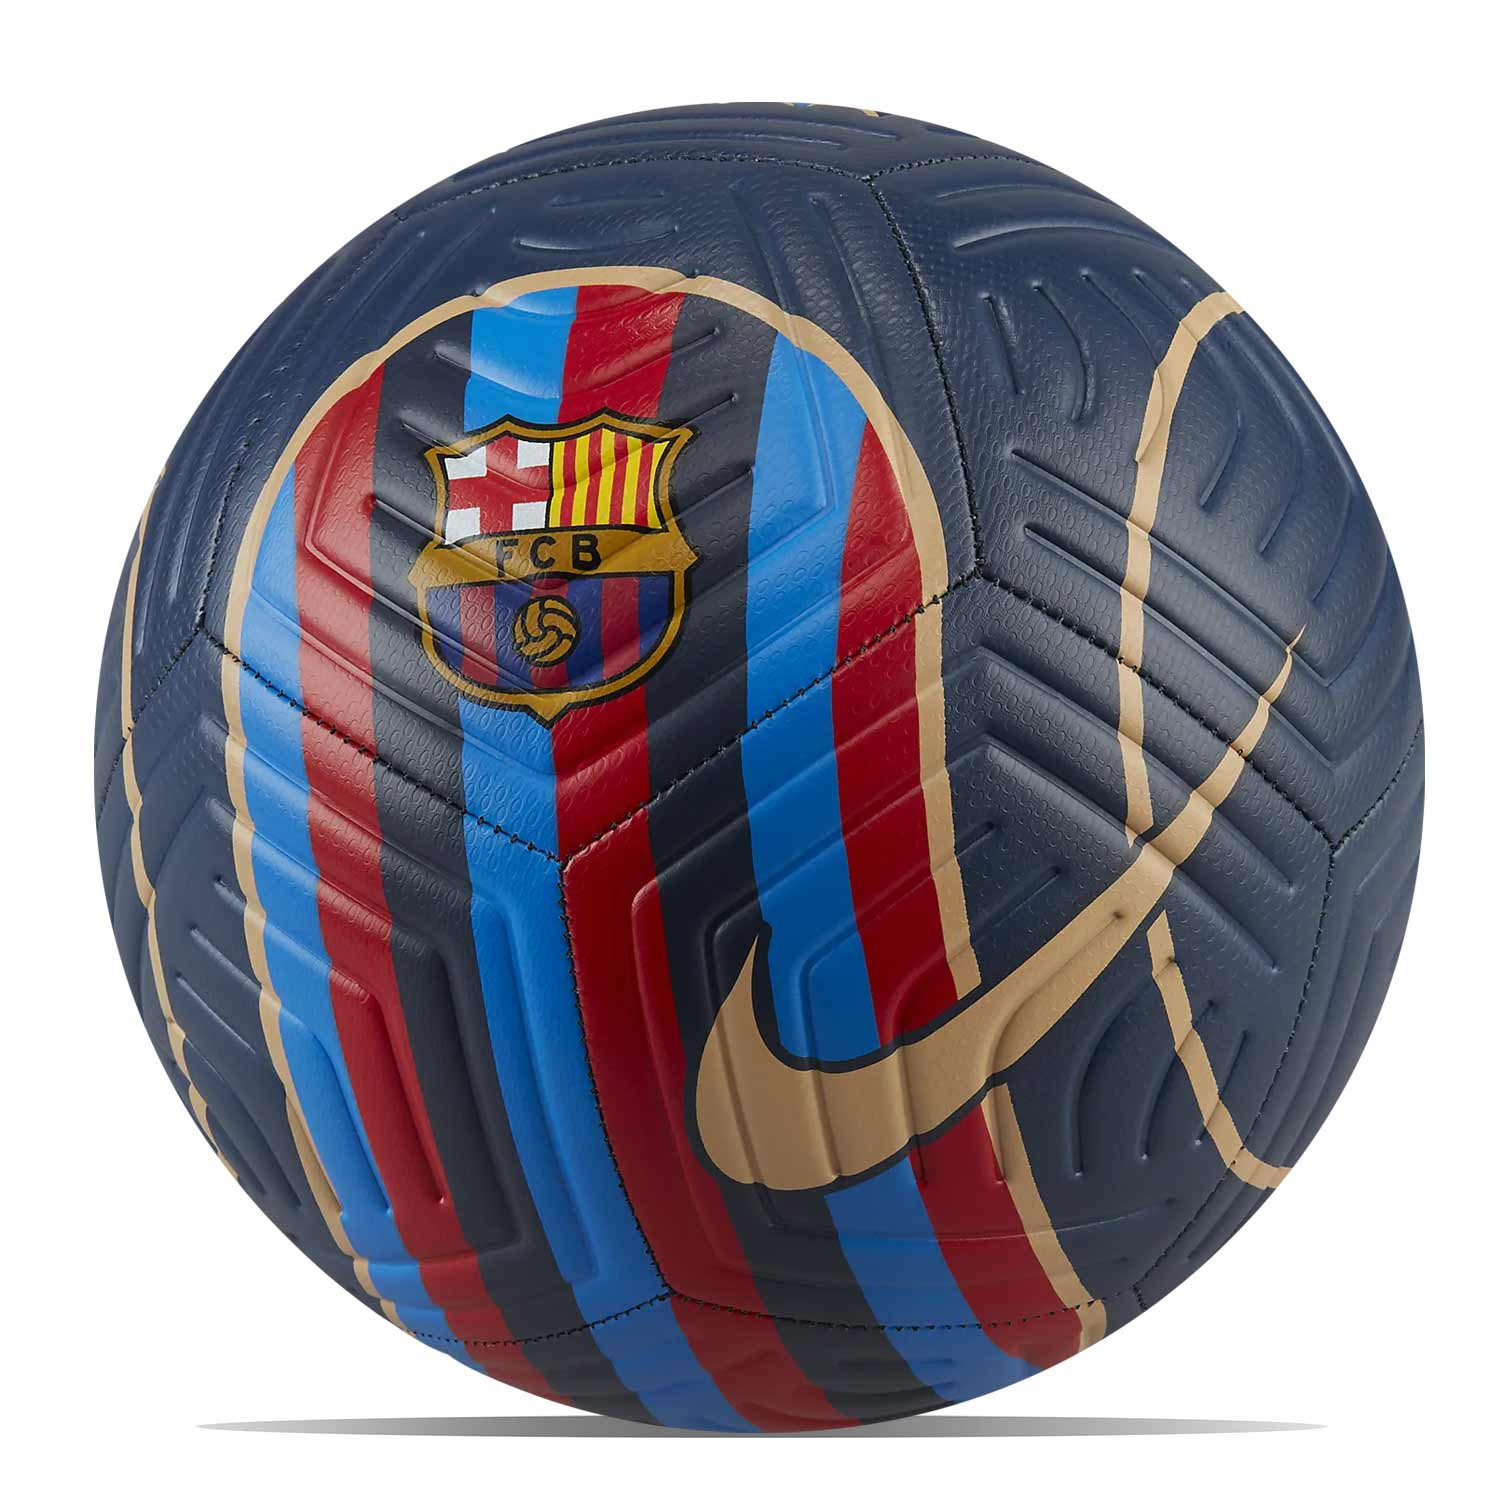 Violar Antorchas puerta Balón de fútbol Nike Strike FC Barcelona talla 5 | futbolmania